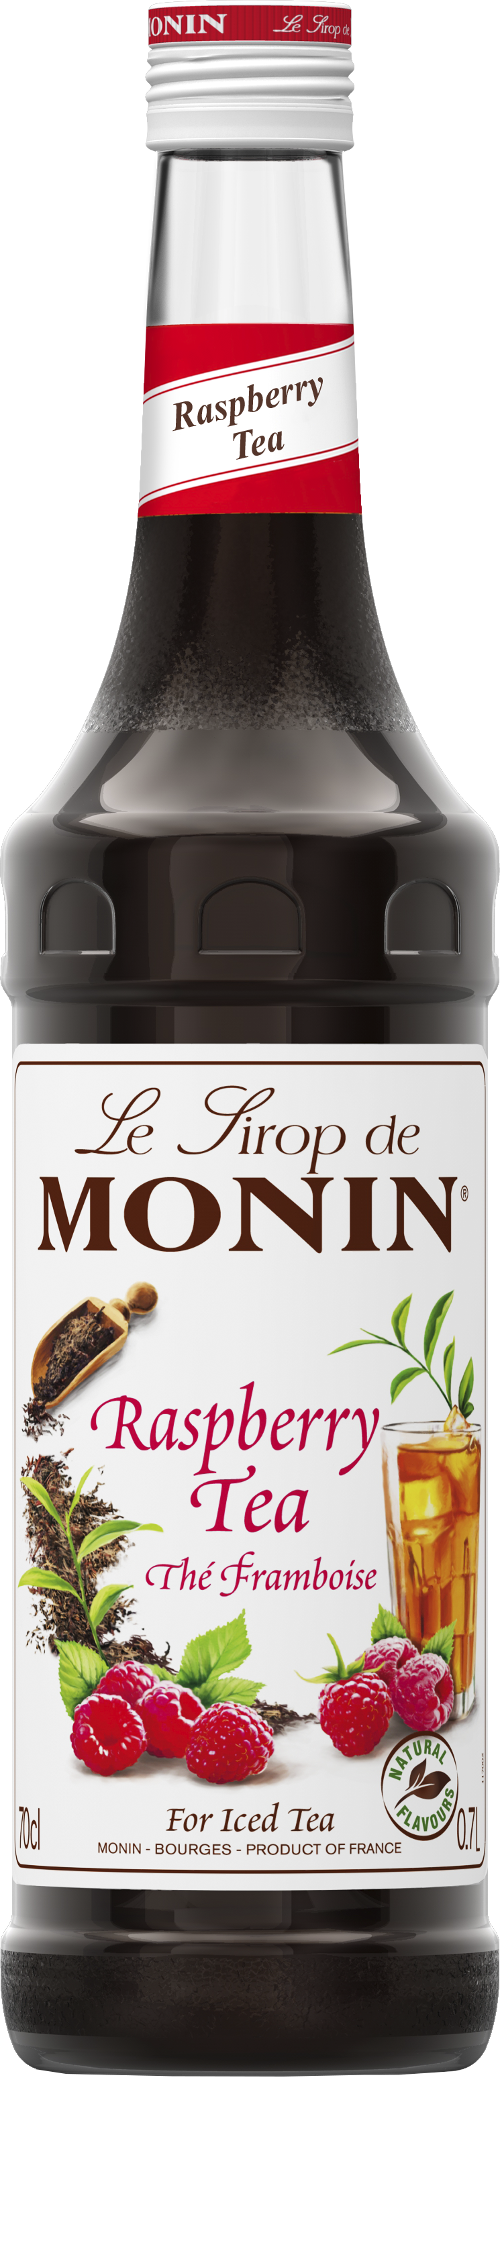 Le Sirop de MONIN Raspberry Tea 0.7l